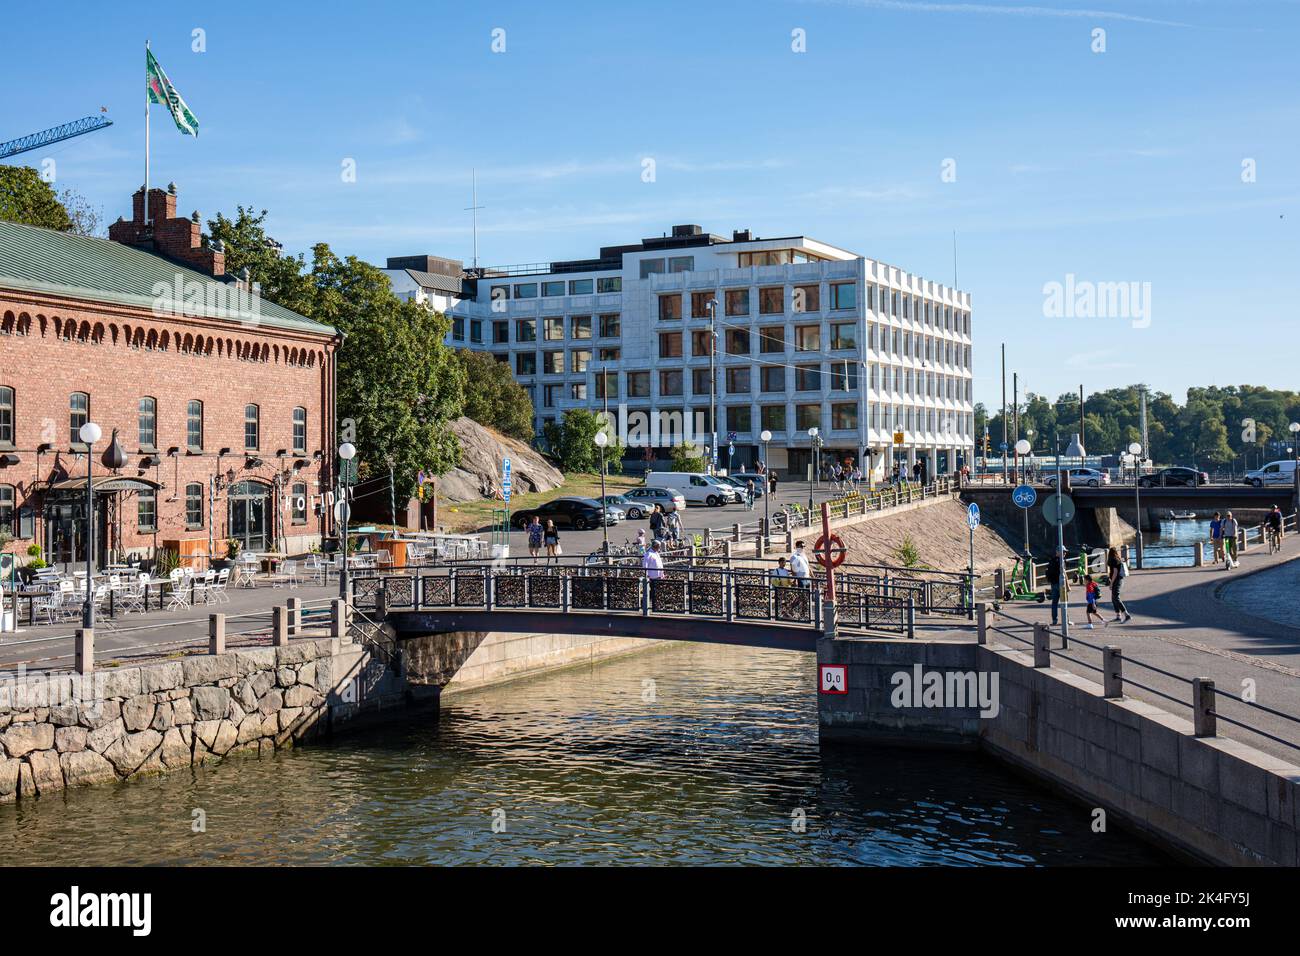 Katajanokan kanava or Katajanokka canal separating Katajanokka and Kruununhaka in Helsinki, Finland Stock Photo